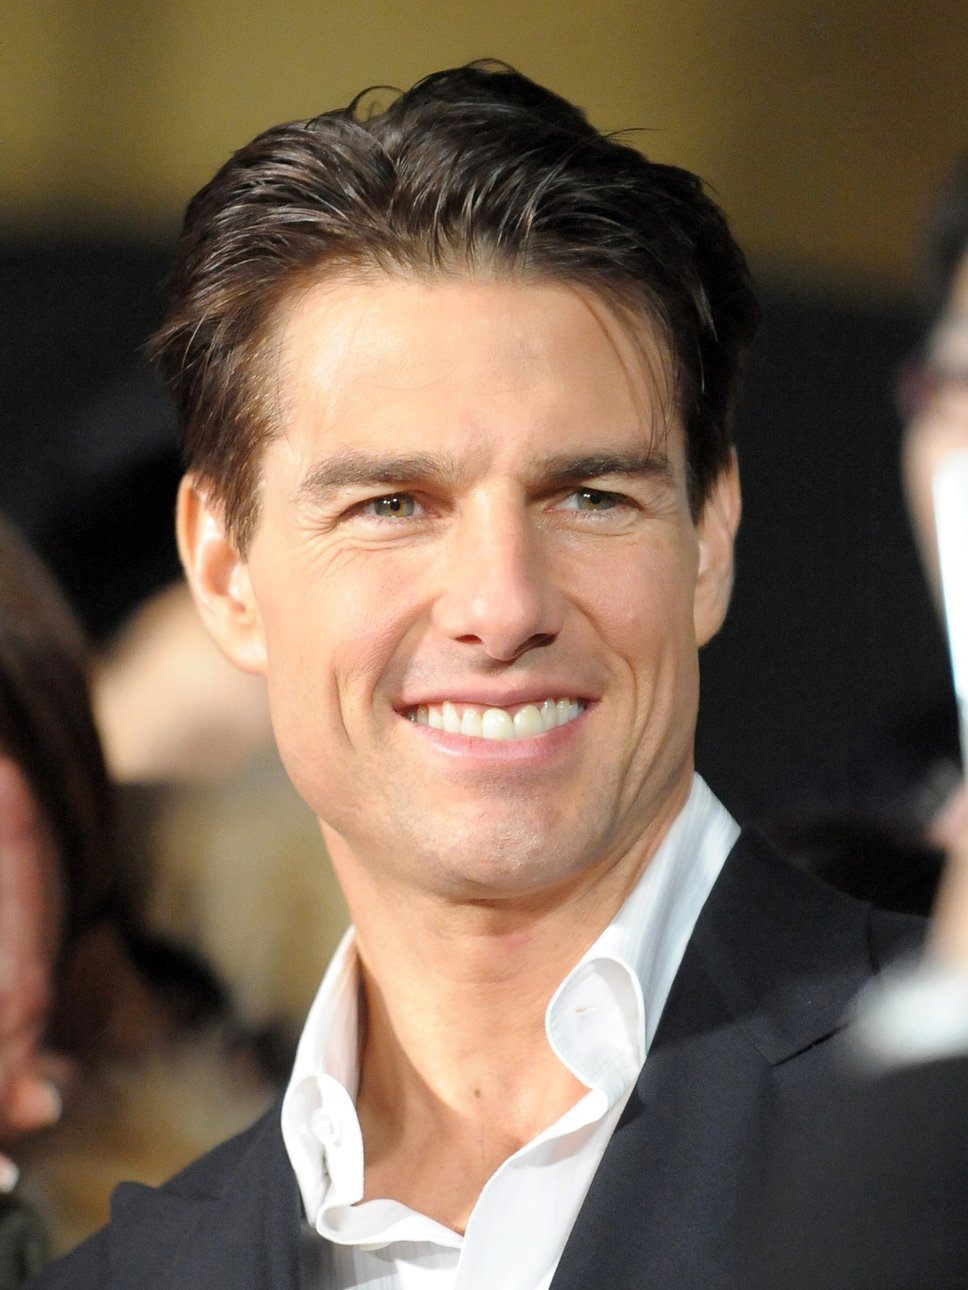 Tom Cruise - Images